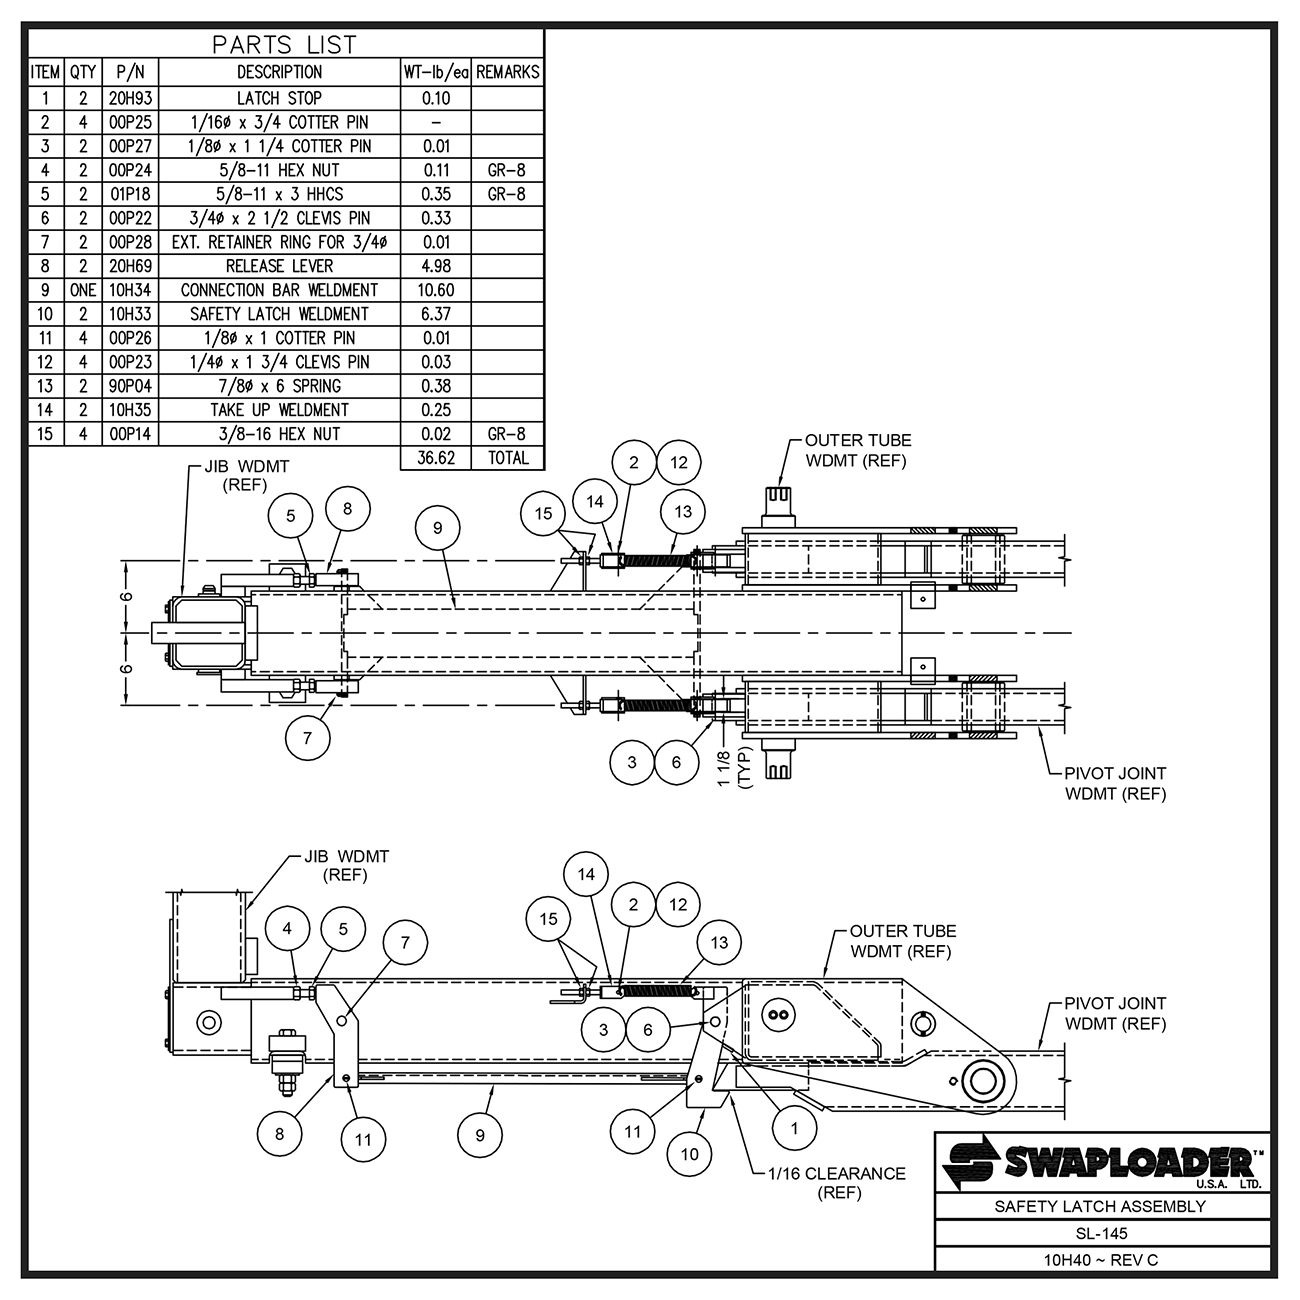 Swaploader SL-145 Safety Latch Assembly Diagram